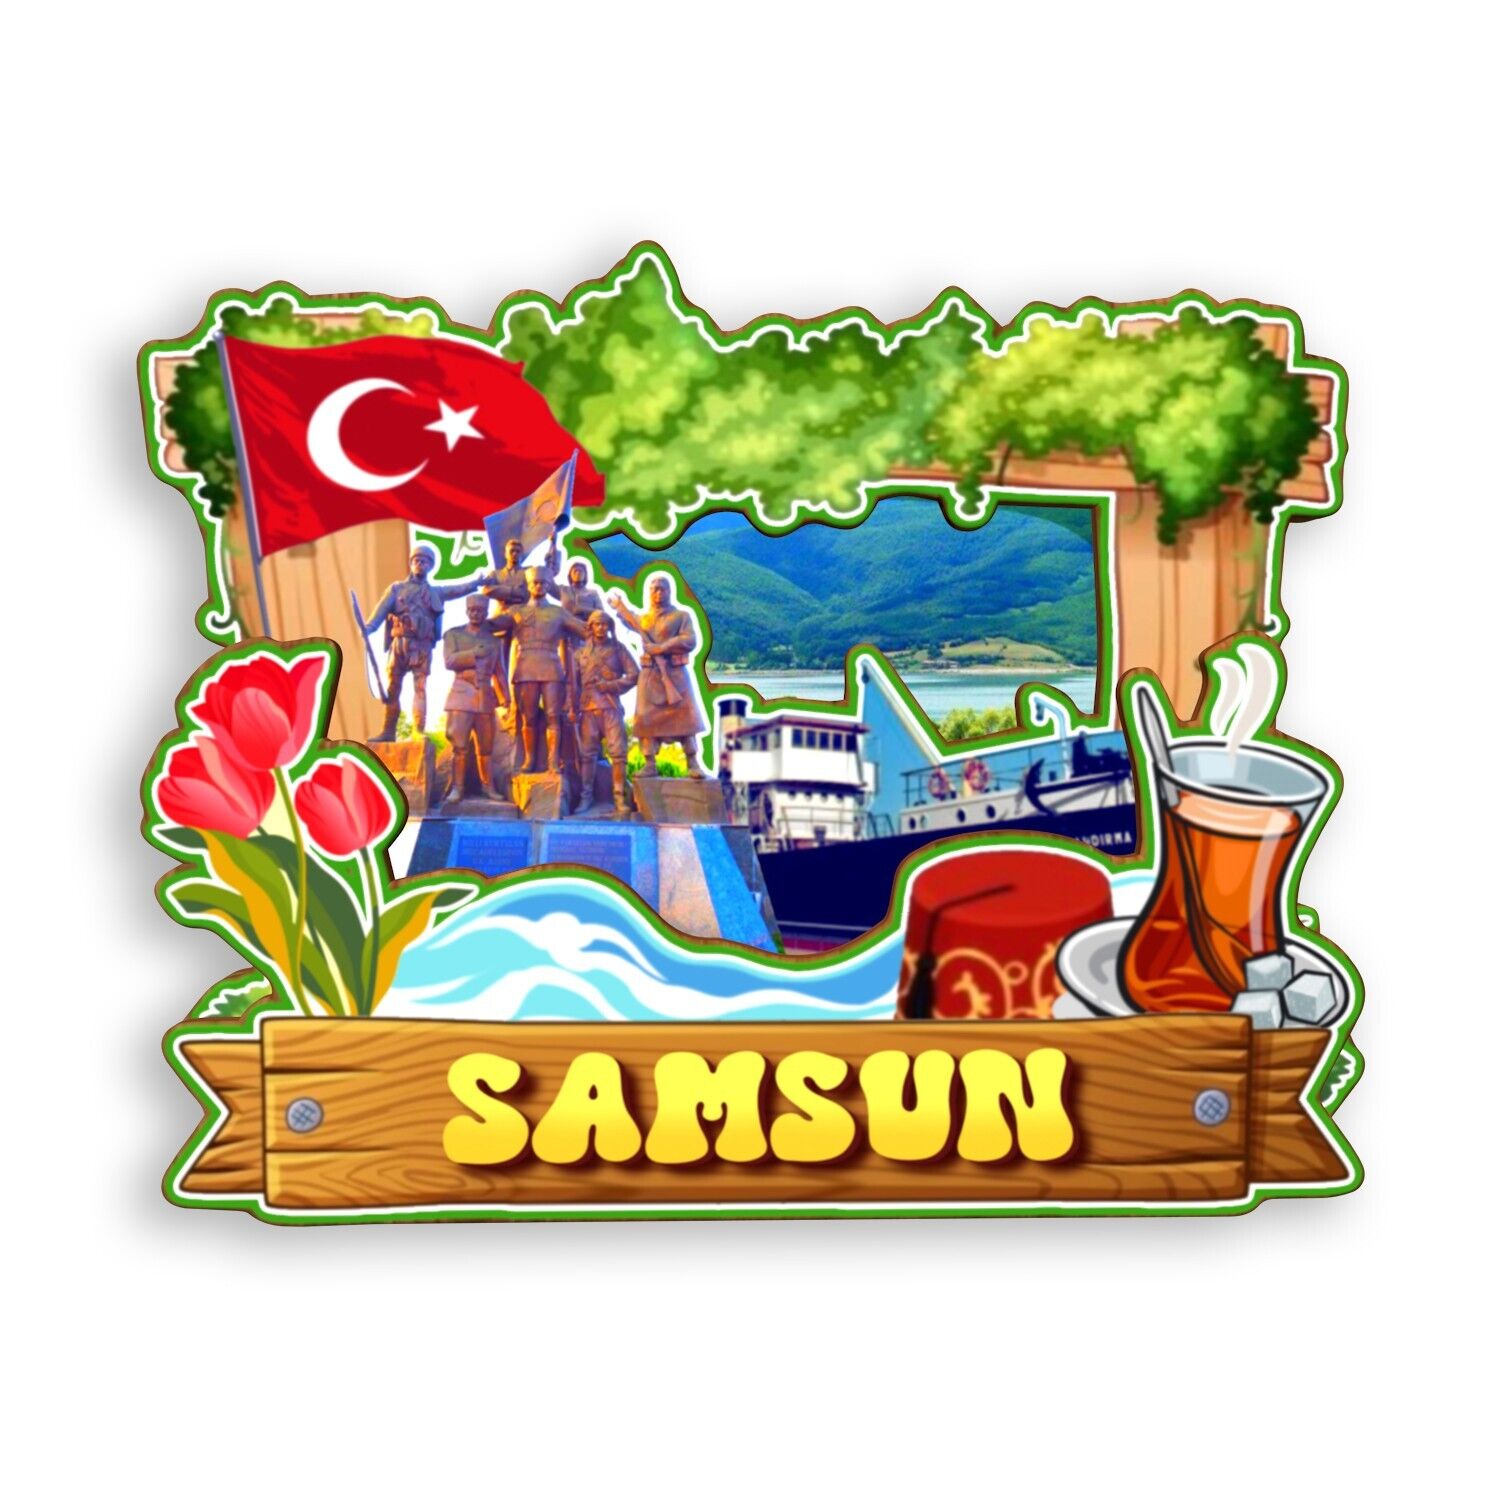 Samsun Turkey Refrigerator magnet 3D travel souvenirs wood craft gifts